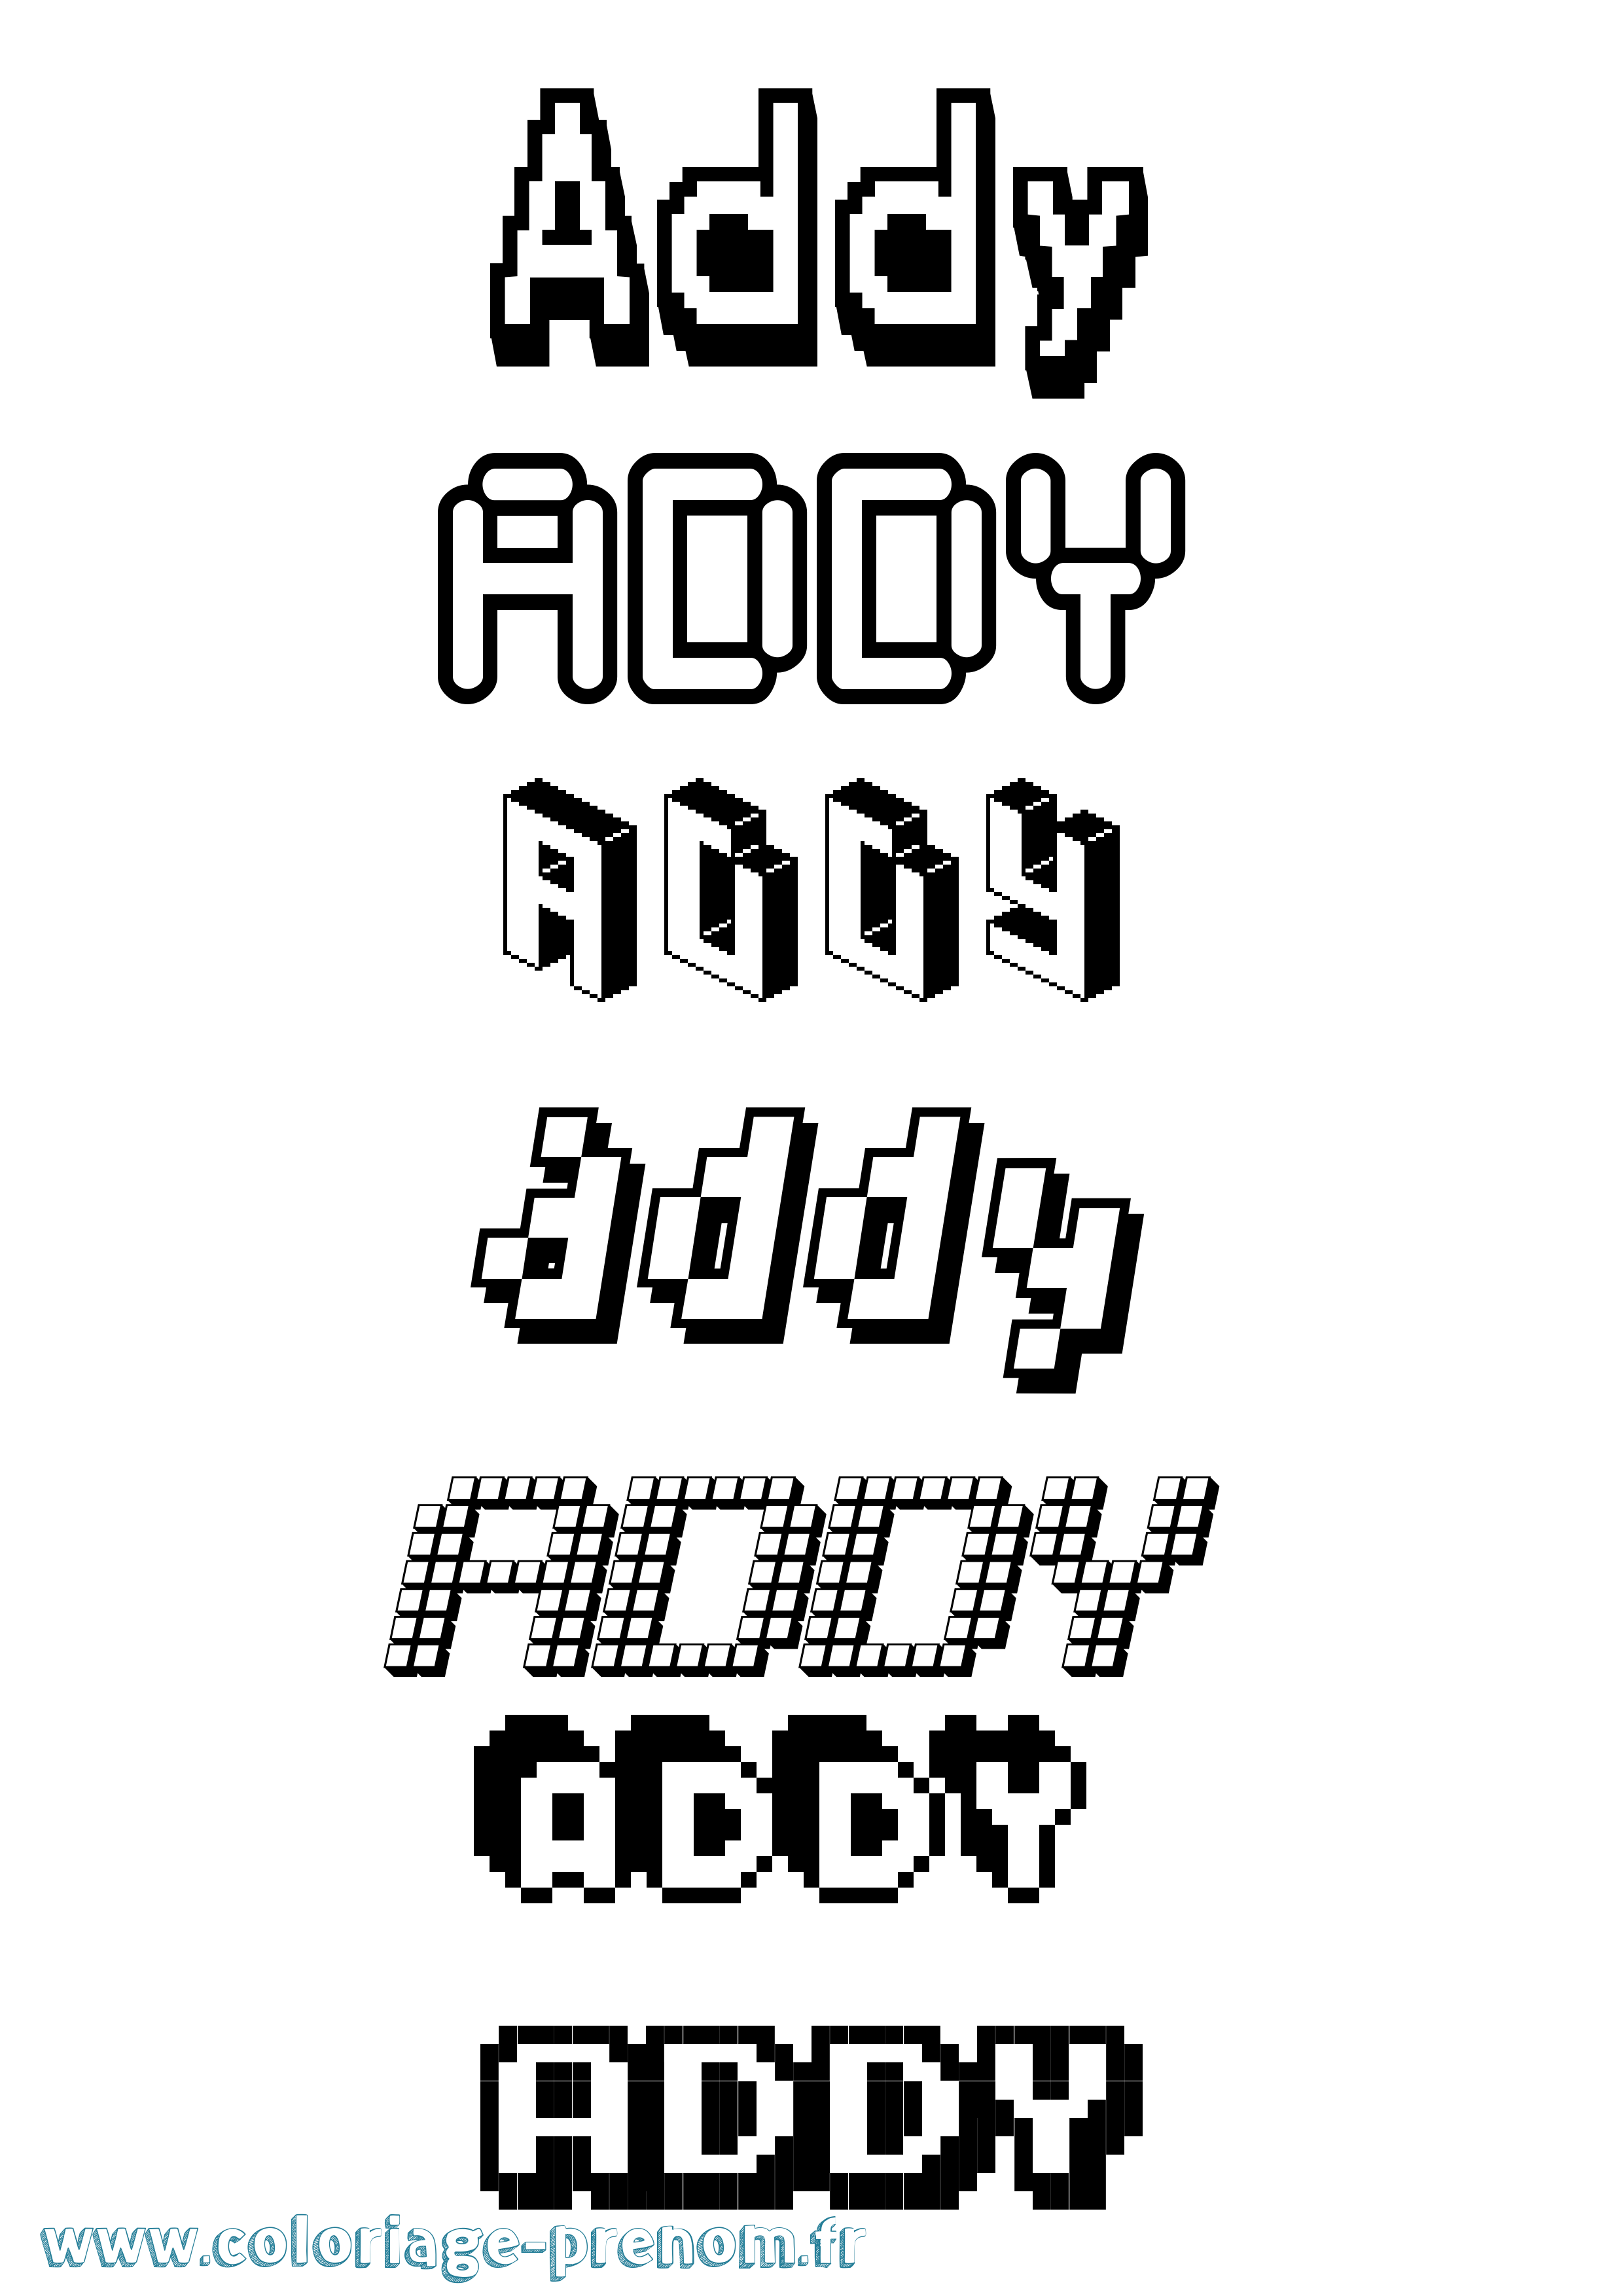 Coloriage prénom Addy Pixel